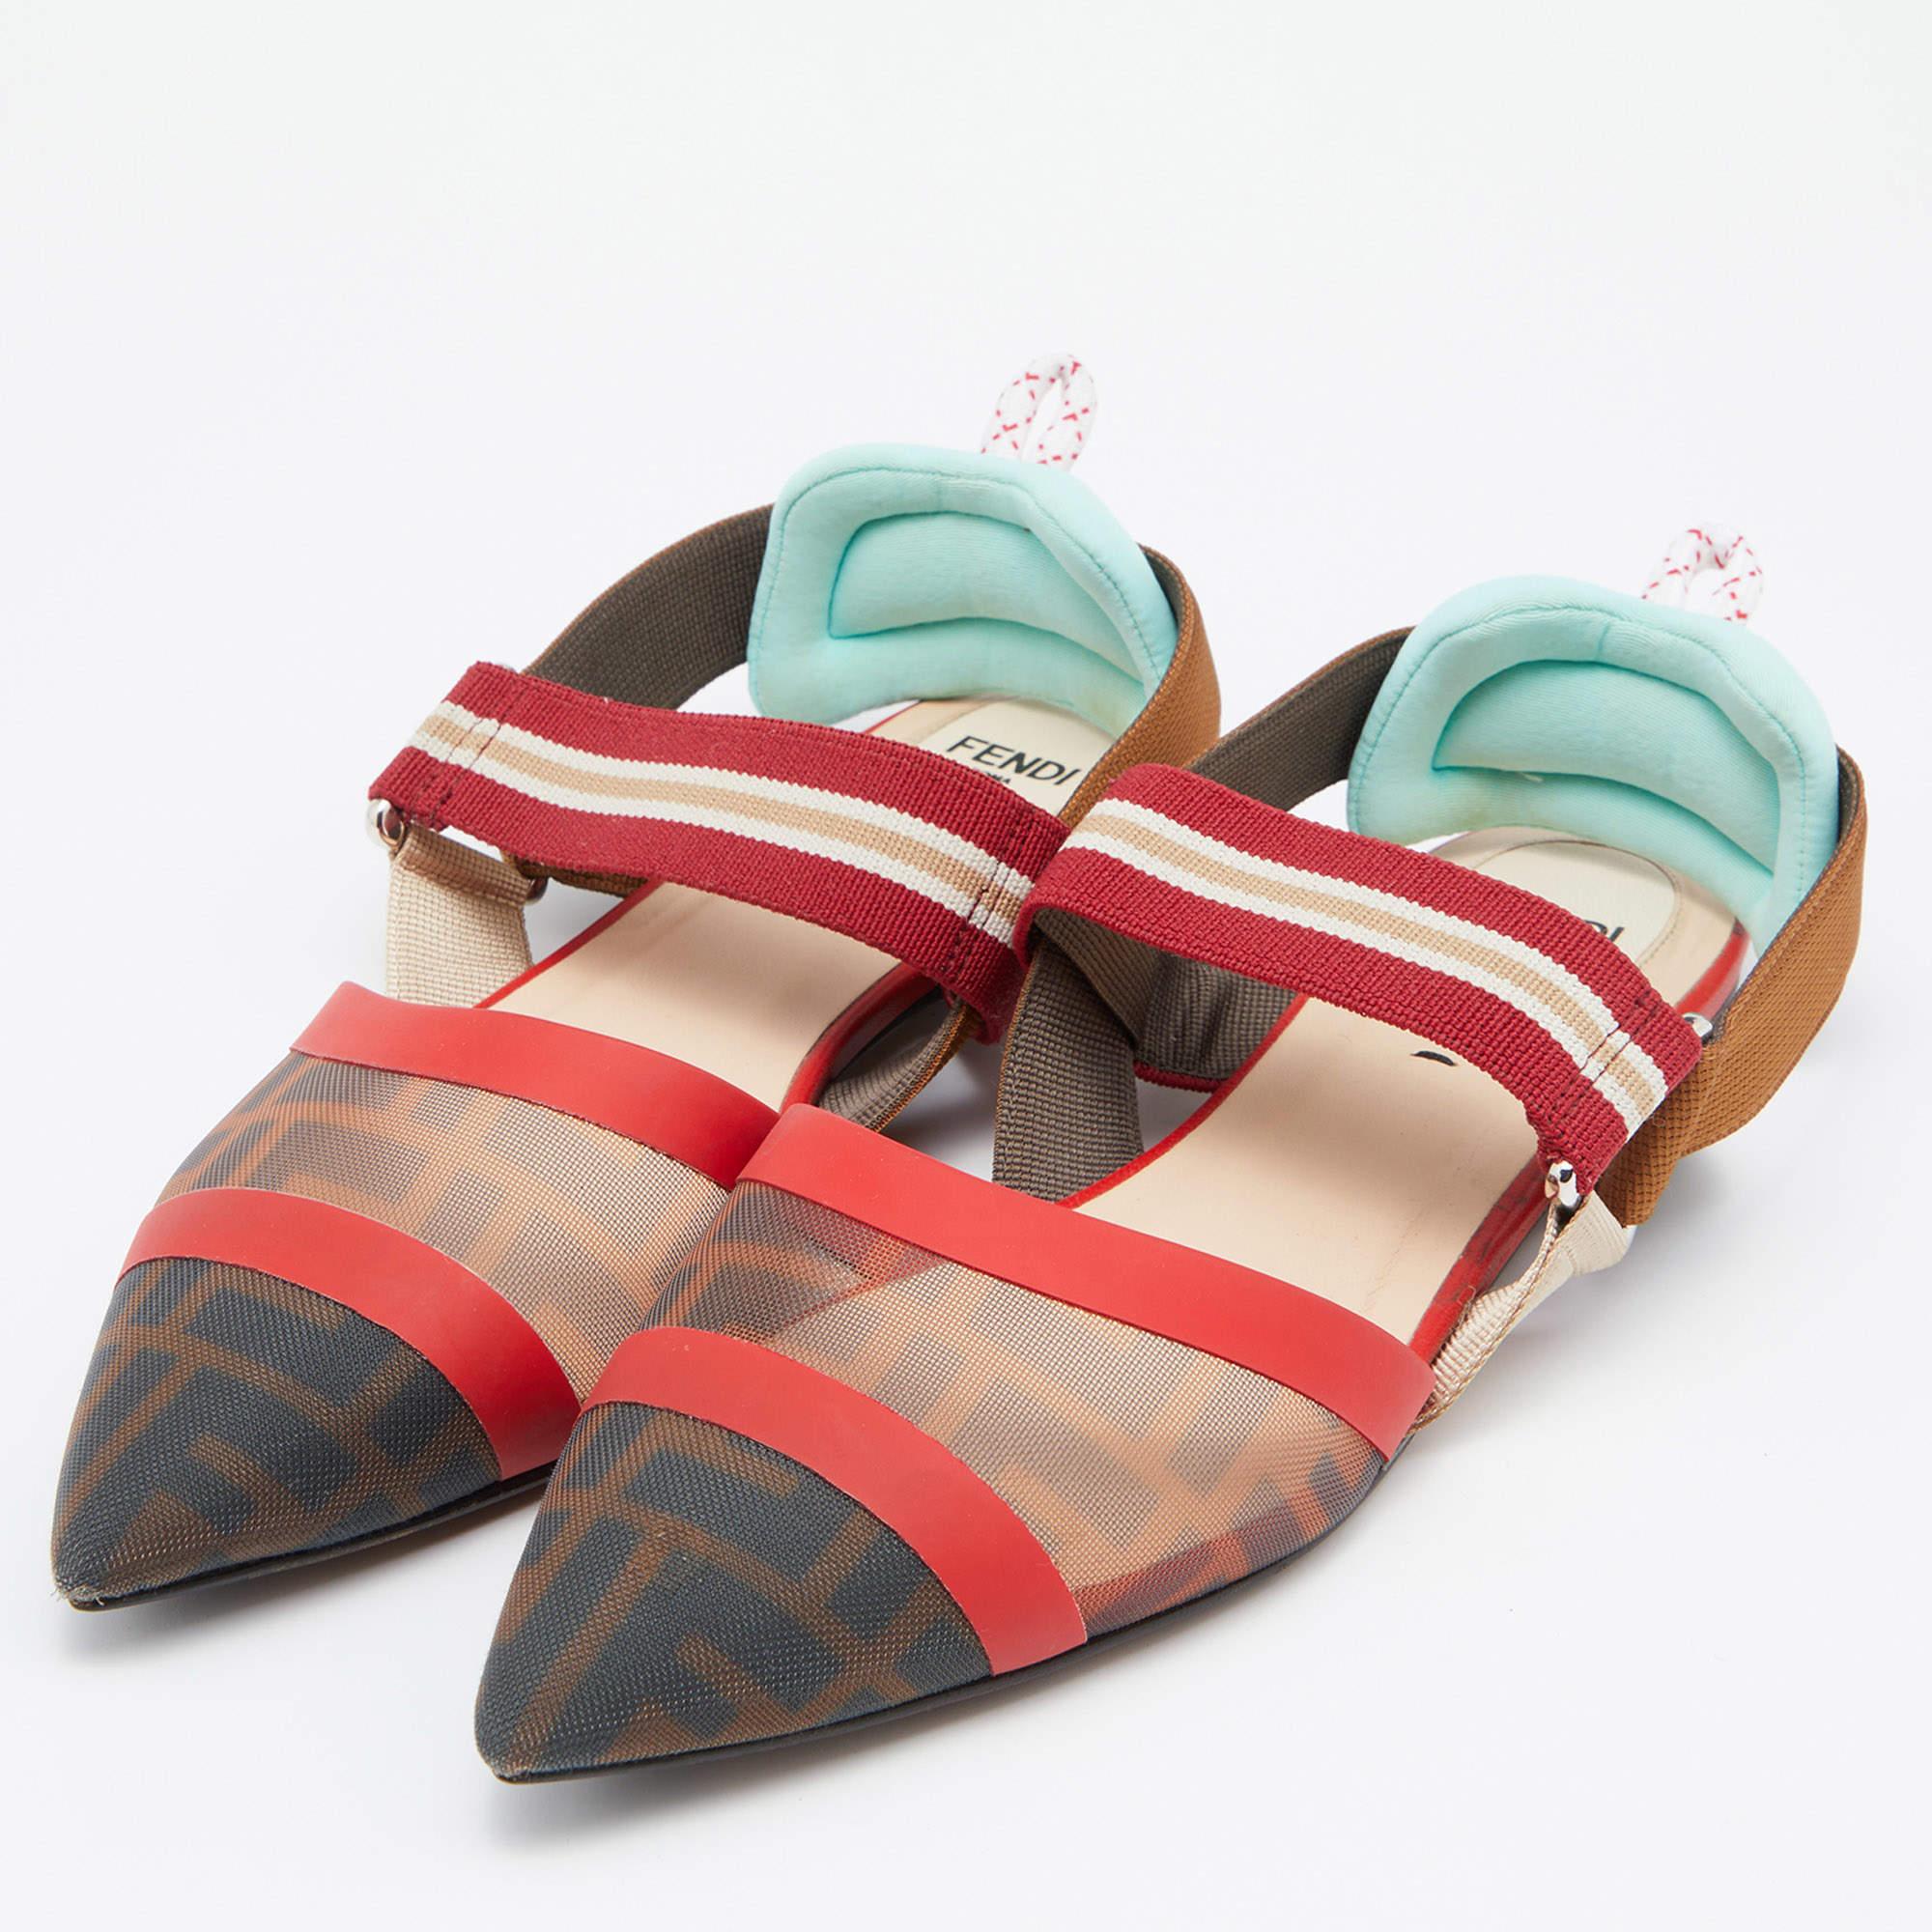 Women's Fendi Multicolor Leather and Mesh Colibri Slingback Sandals Size 37